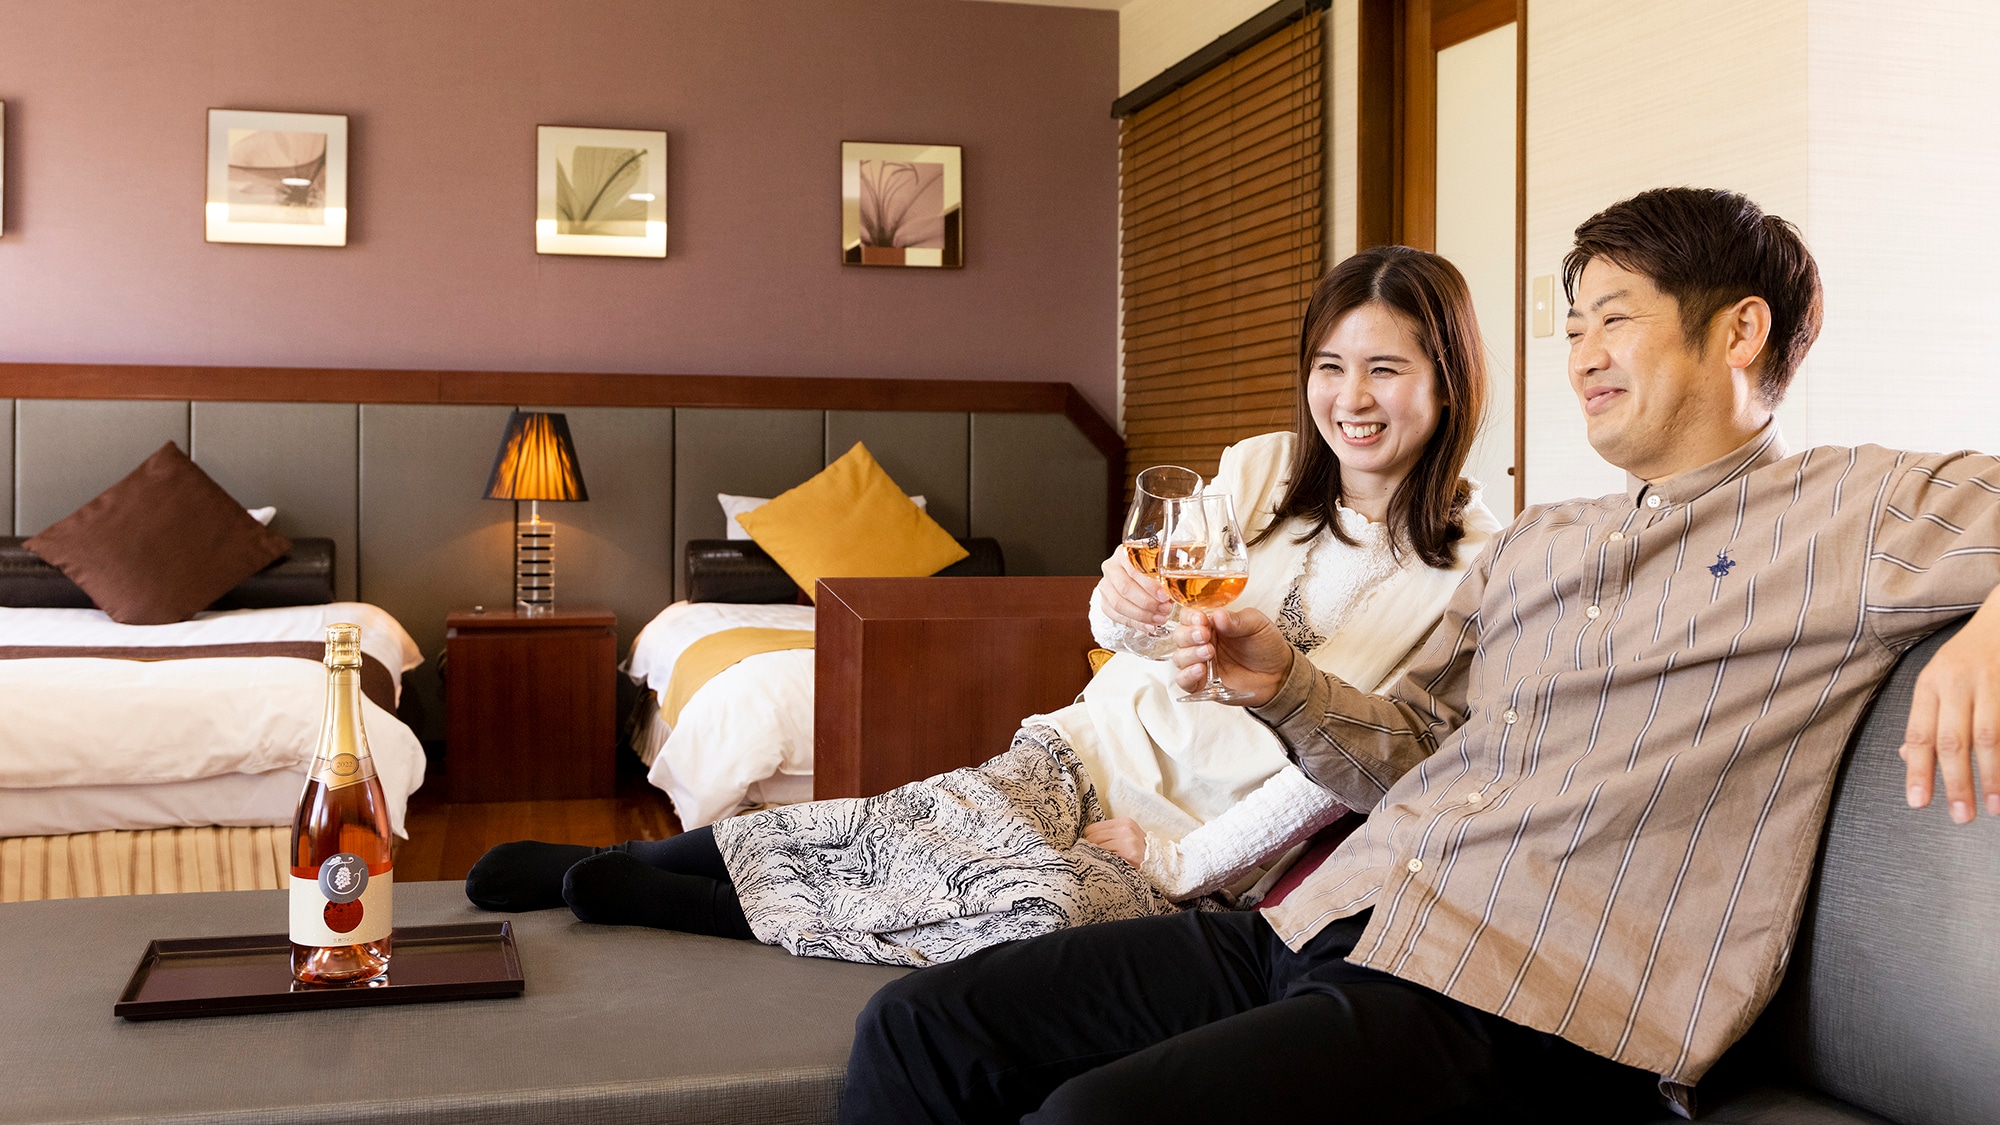 【DX双床小型套房】在具有度假村般装潢的房间里，享受只属于你们两人的轻松时光。